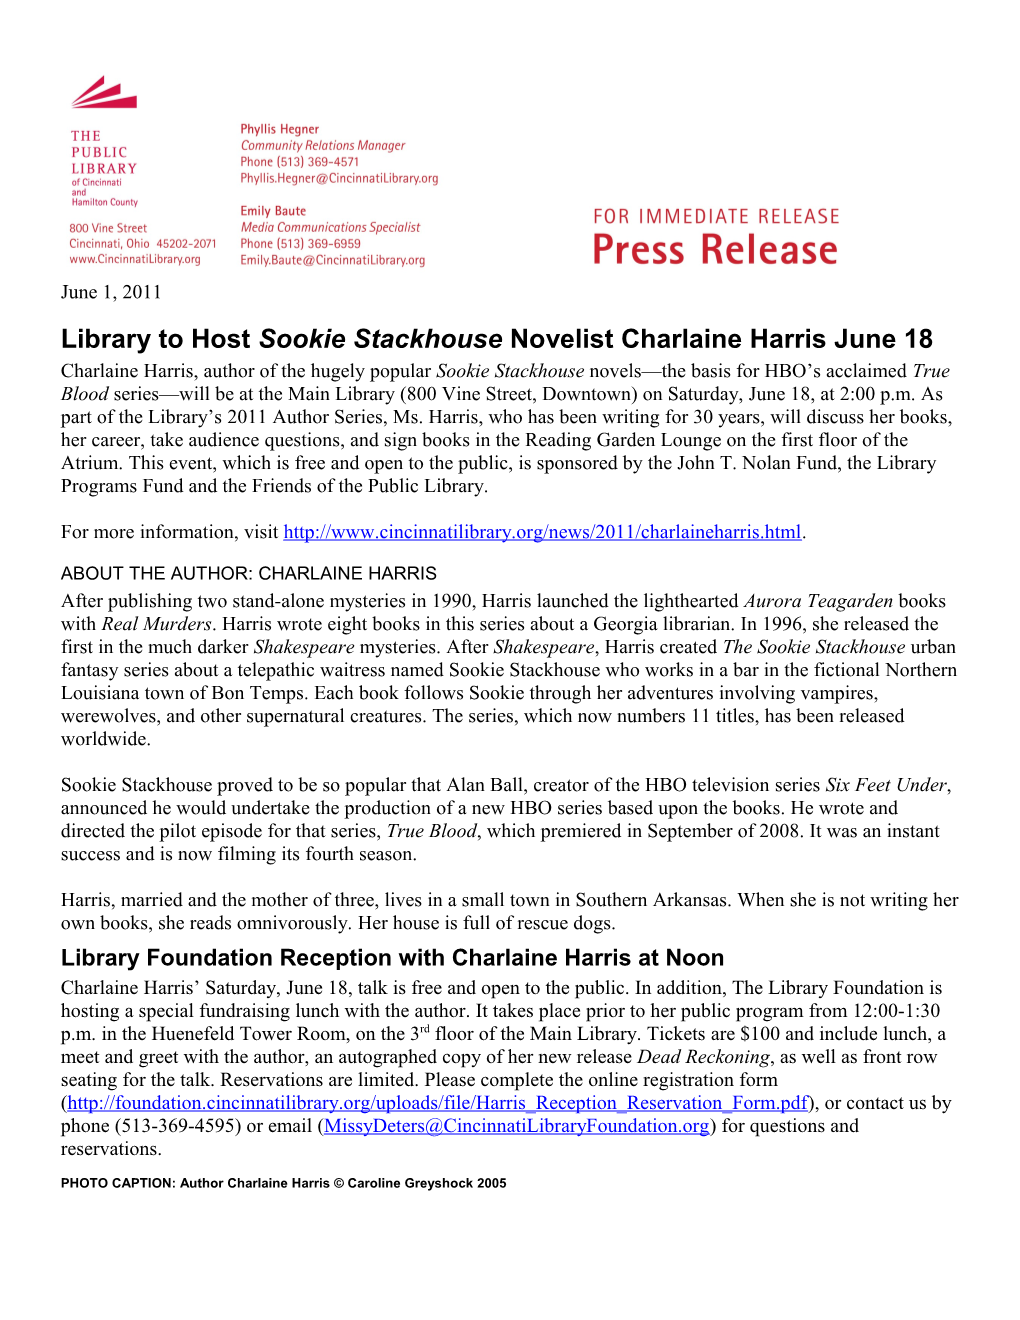 Library to Host Sookie Stackhouse Novelist Charlaine Harris June 18